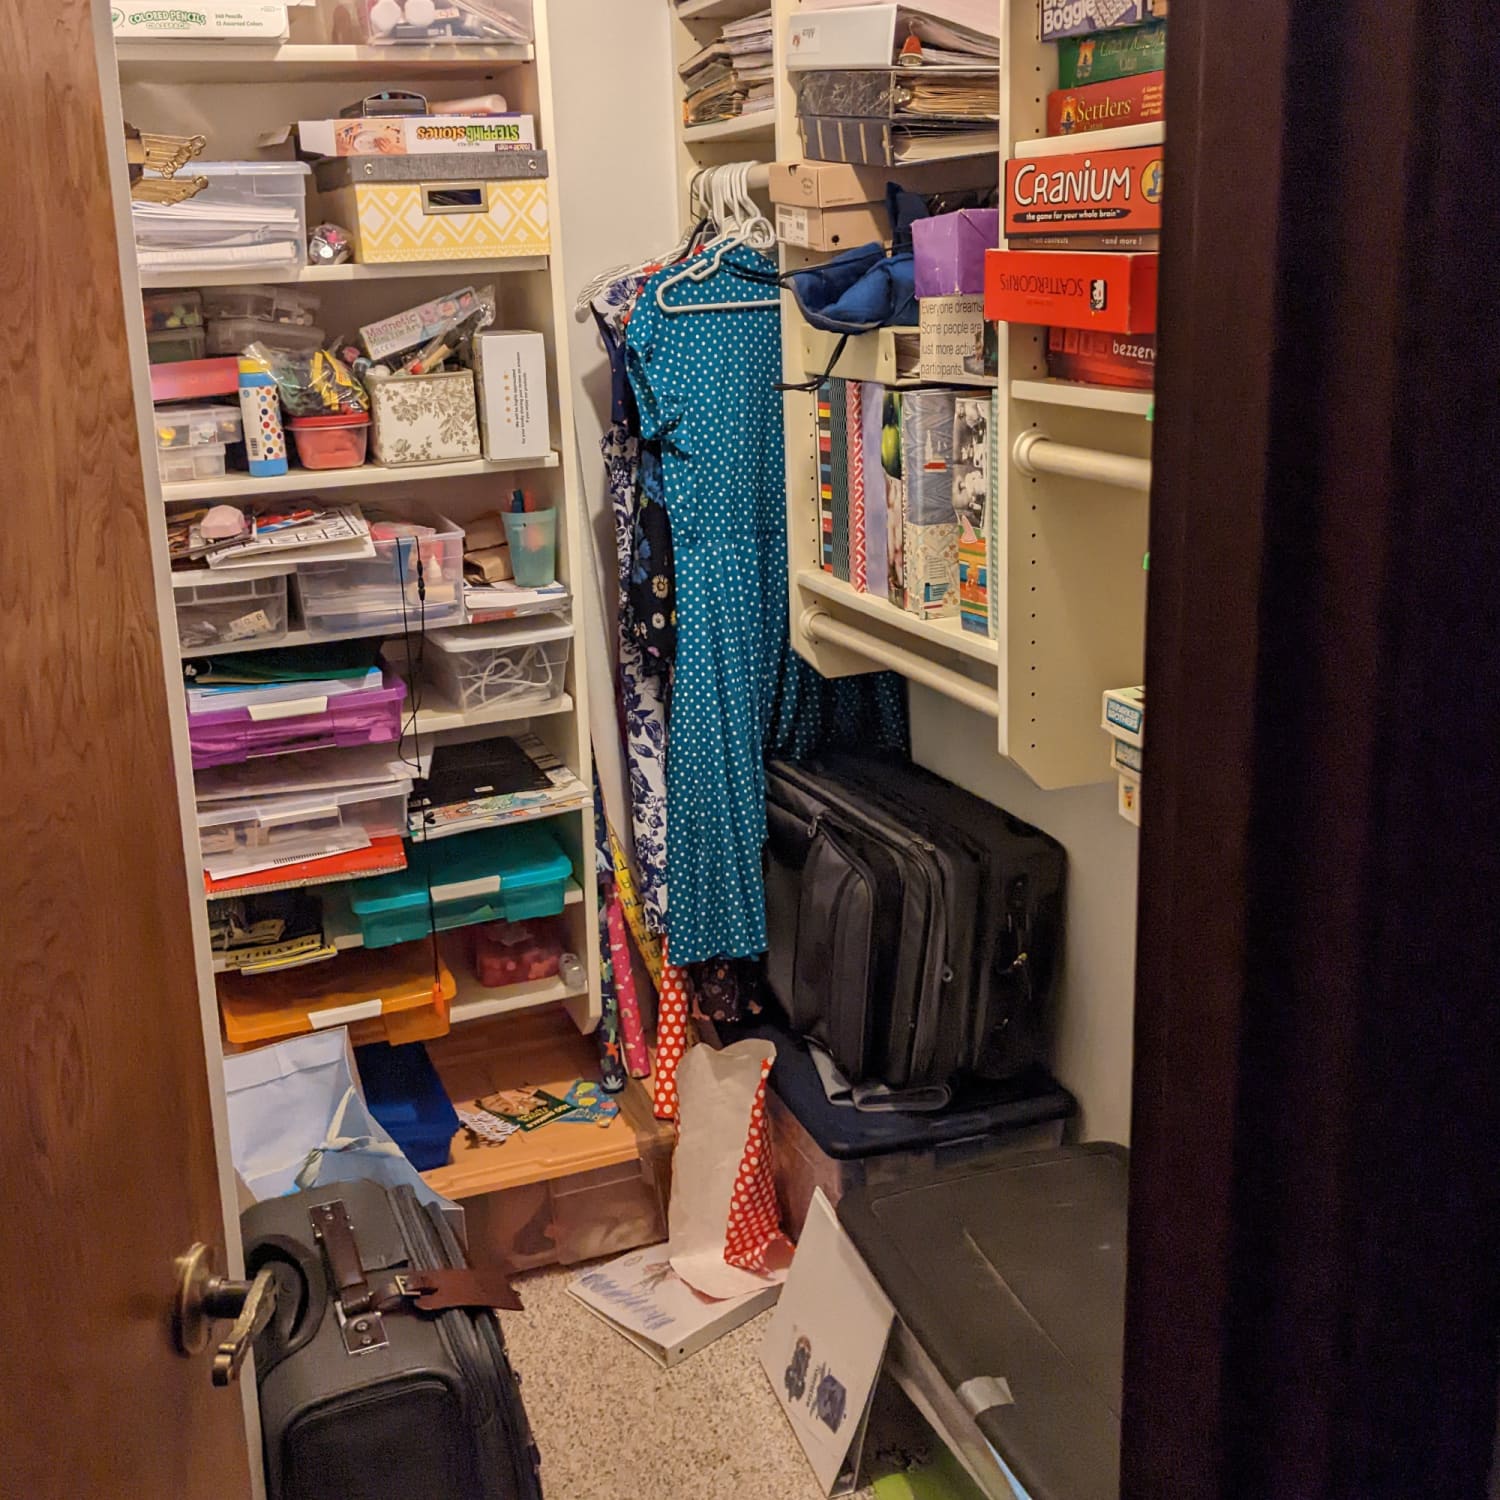 How a Pro Organizer Helped Me Organize My Hallway Closet